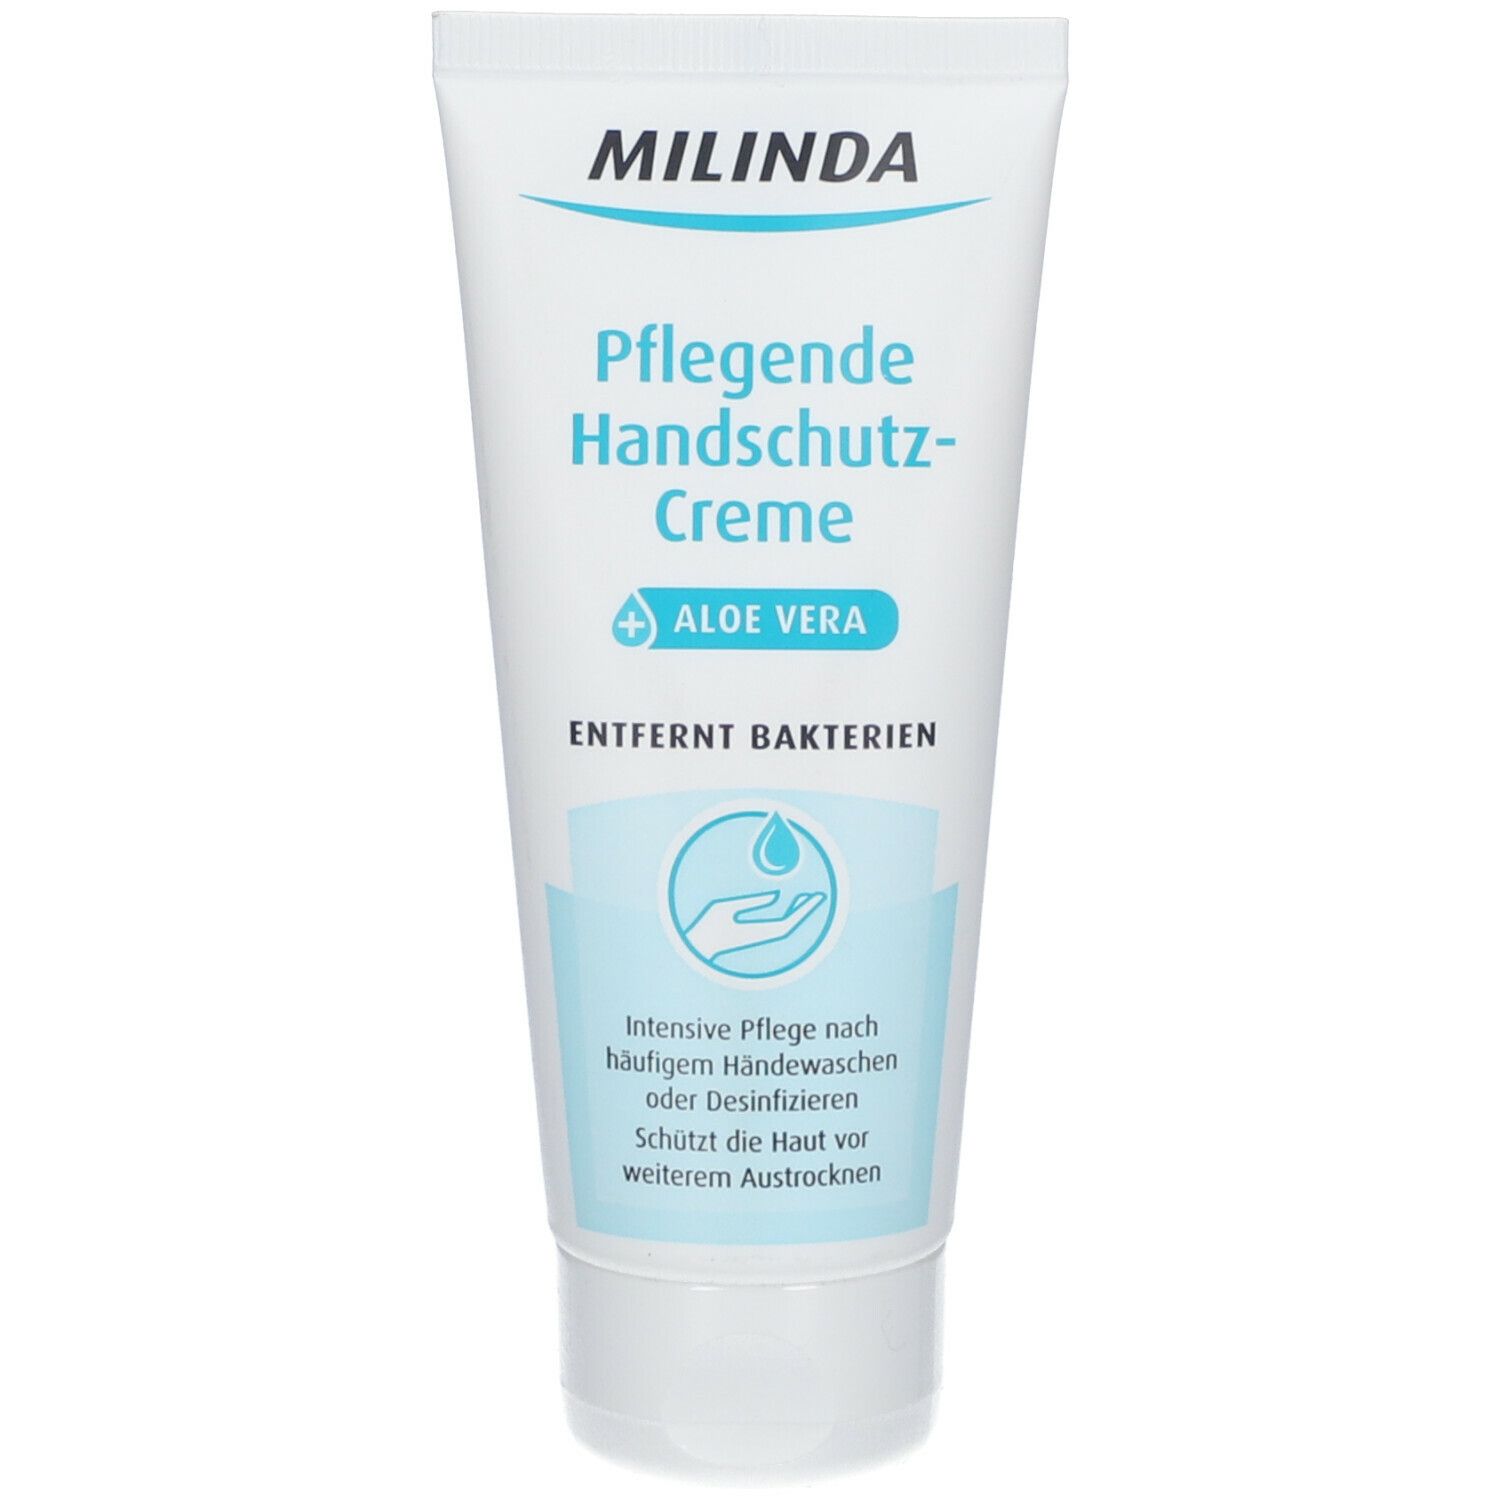 Image of MILINDA Pflegende Handschutz-Creme